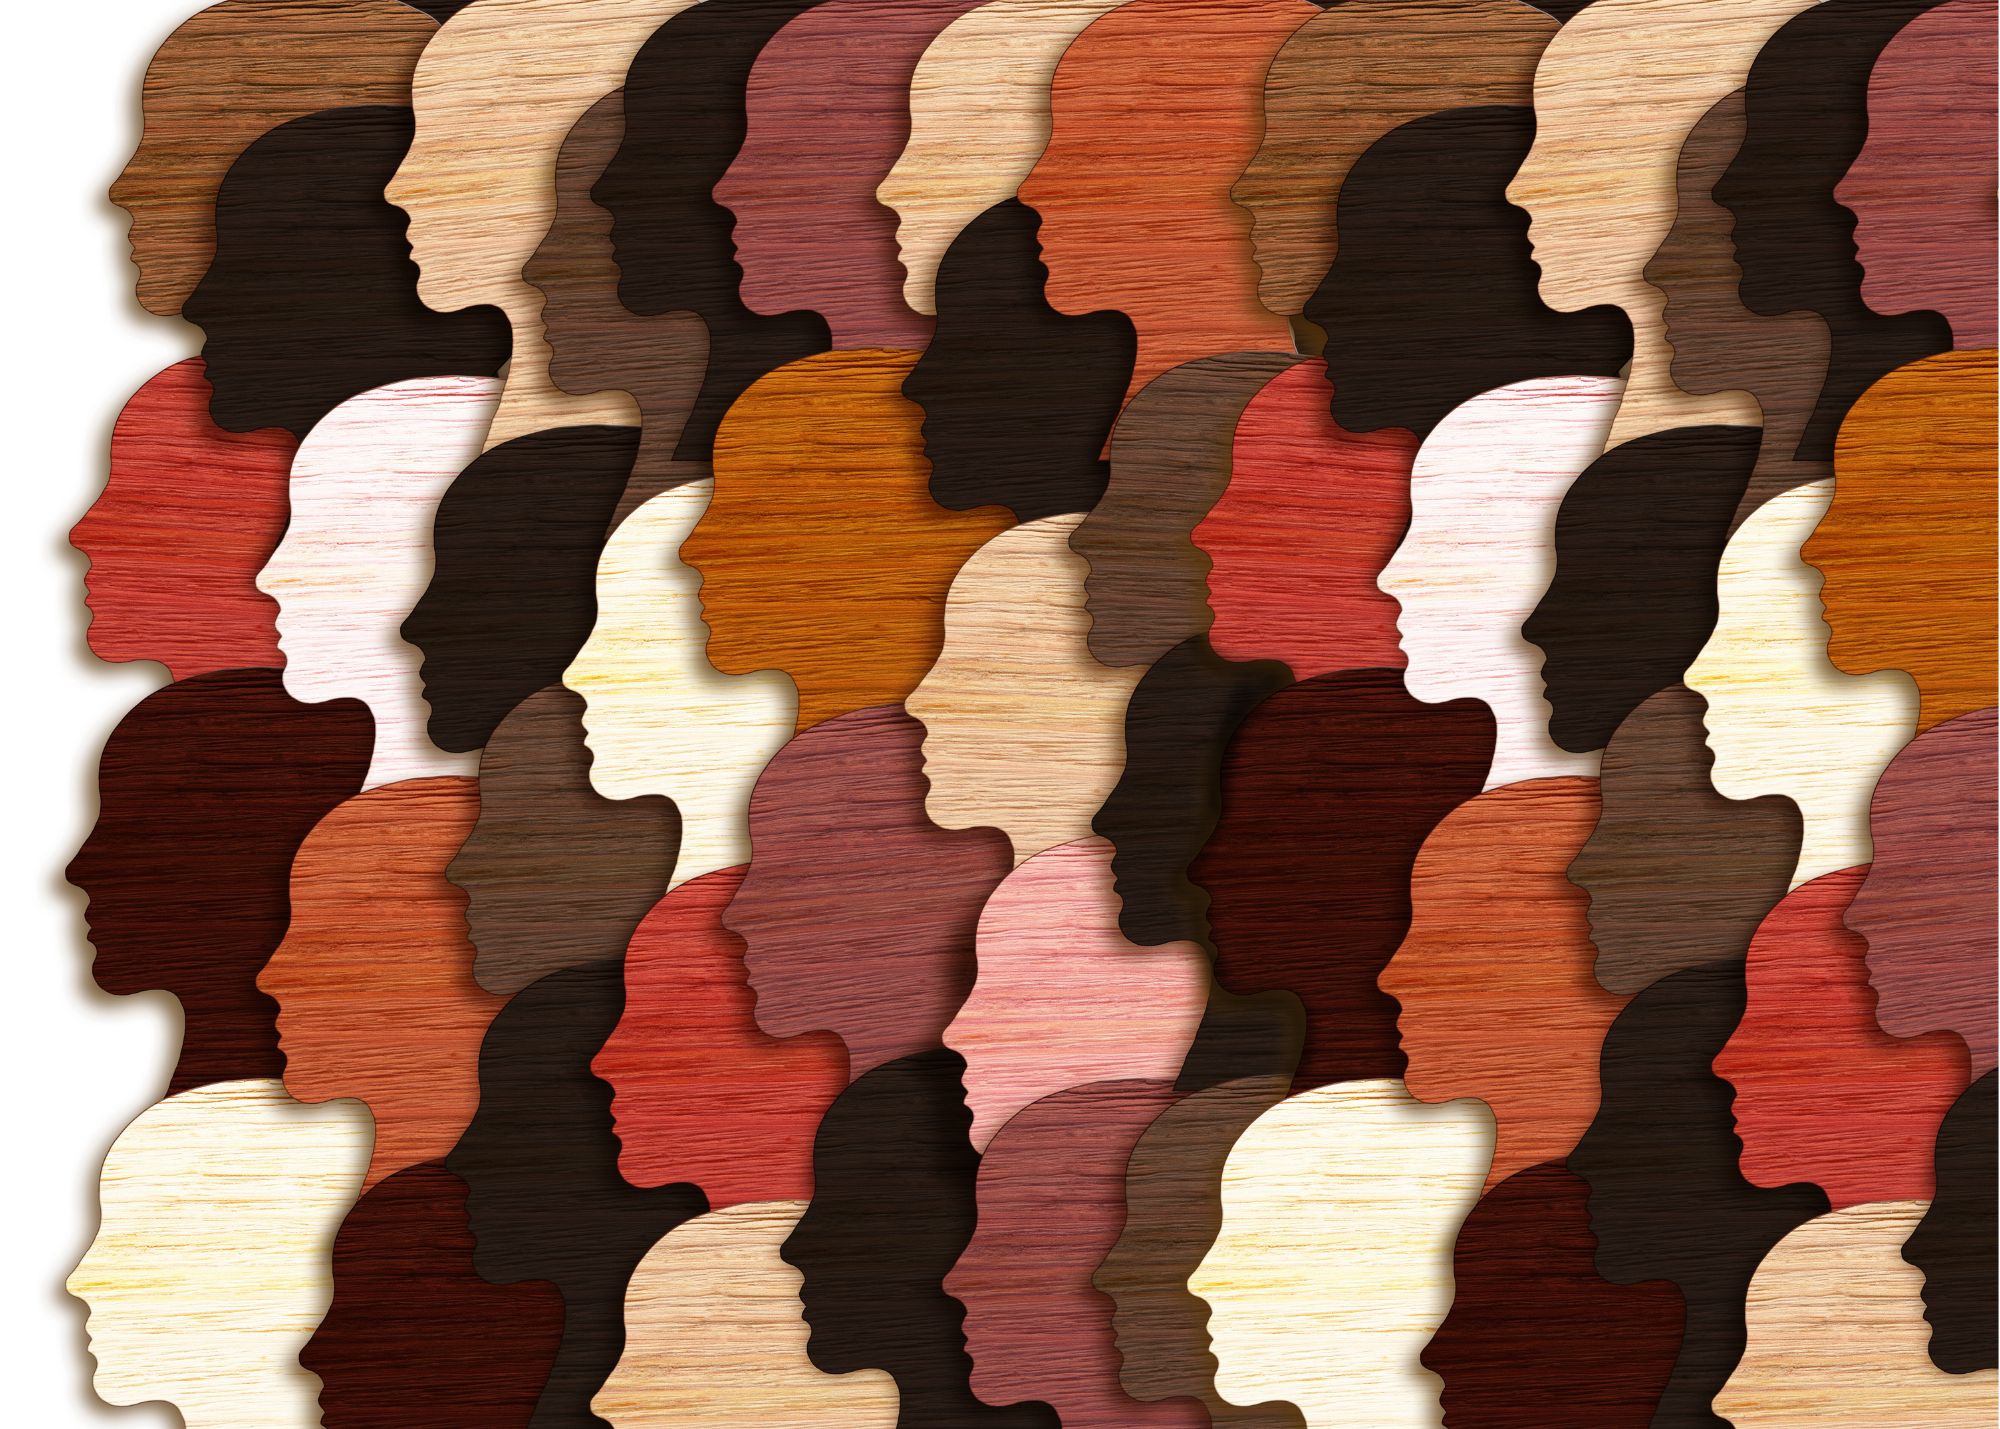 A diverse range of skin tones in an illustration.